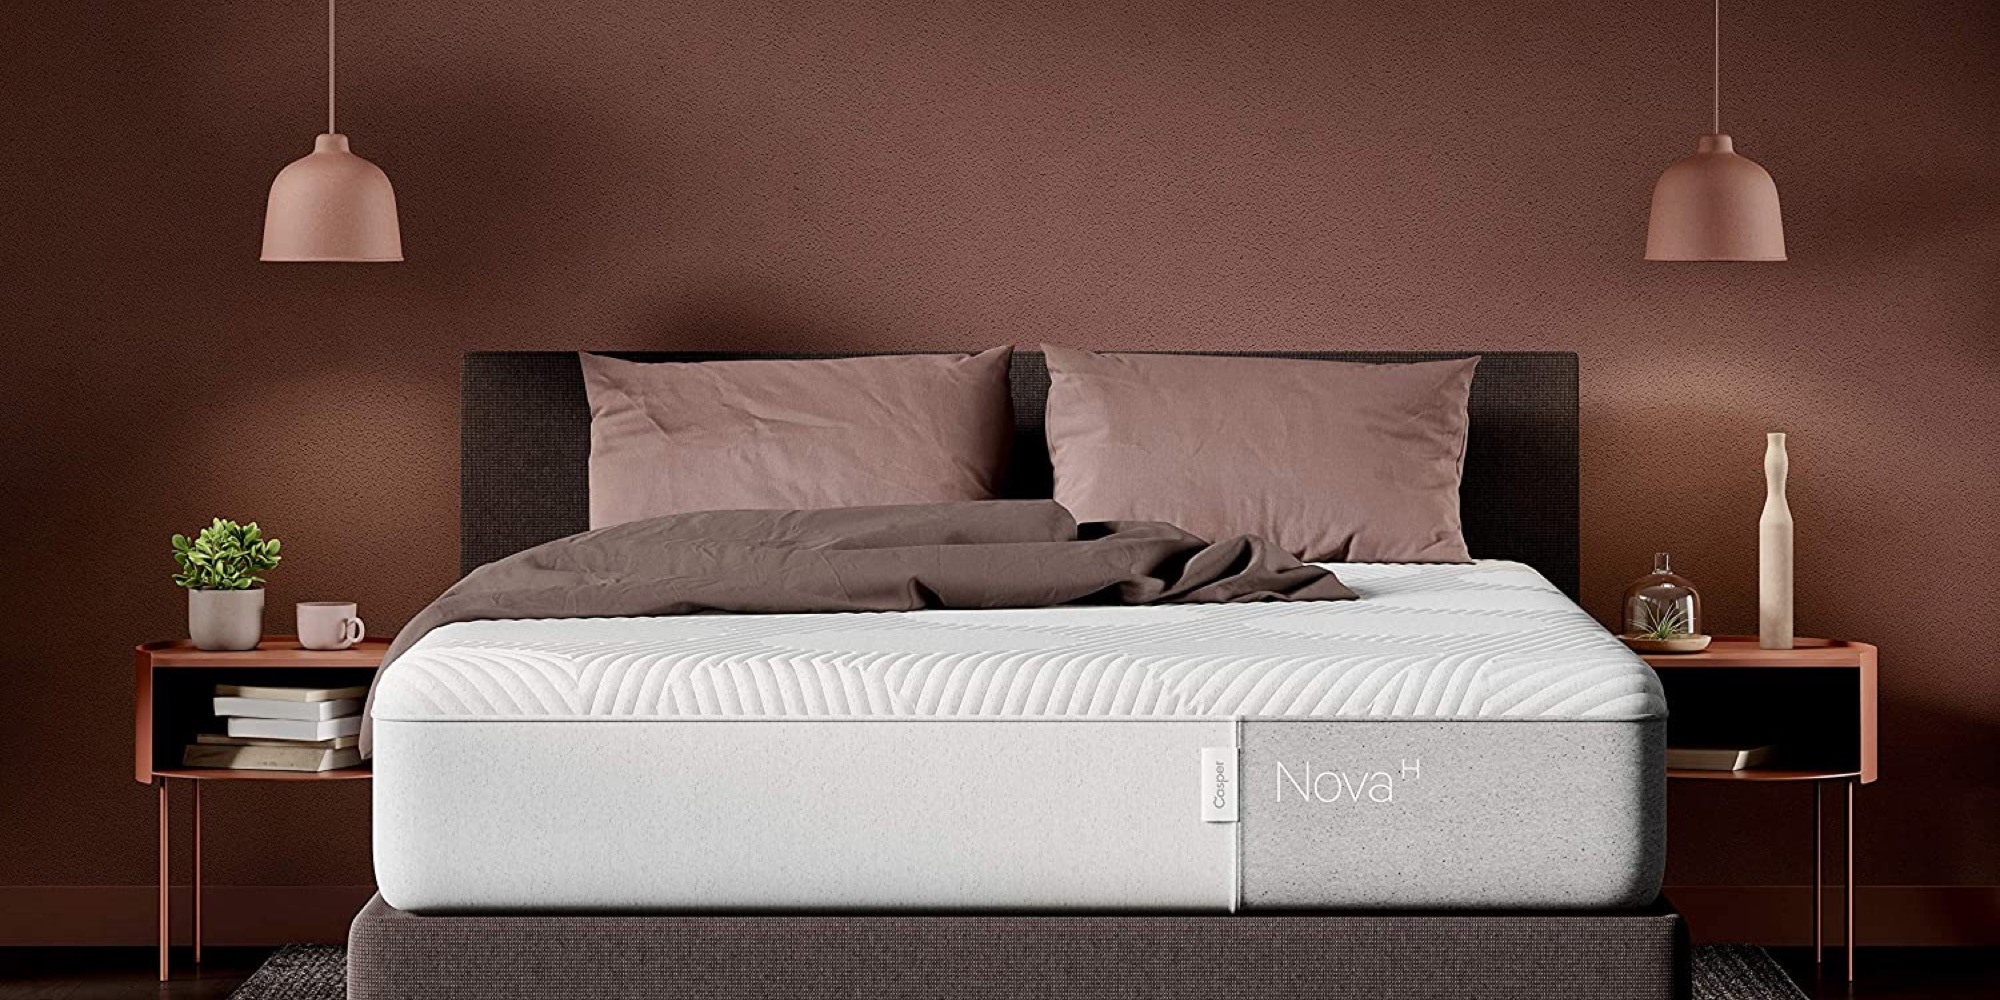 do casper mattresses work with adjustable beds